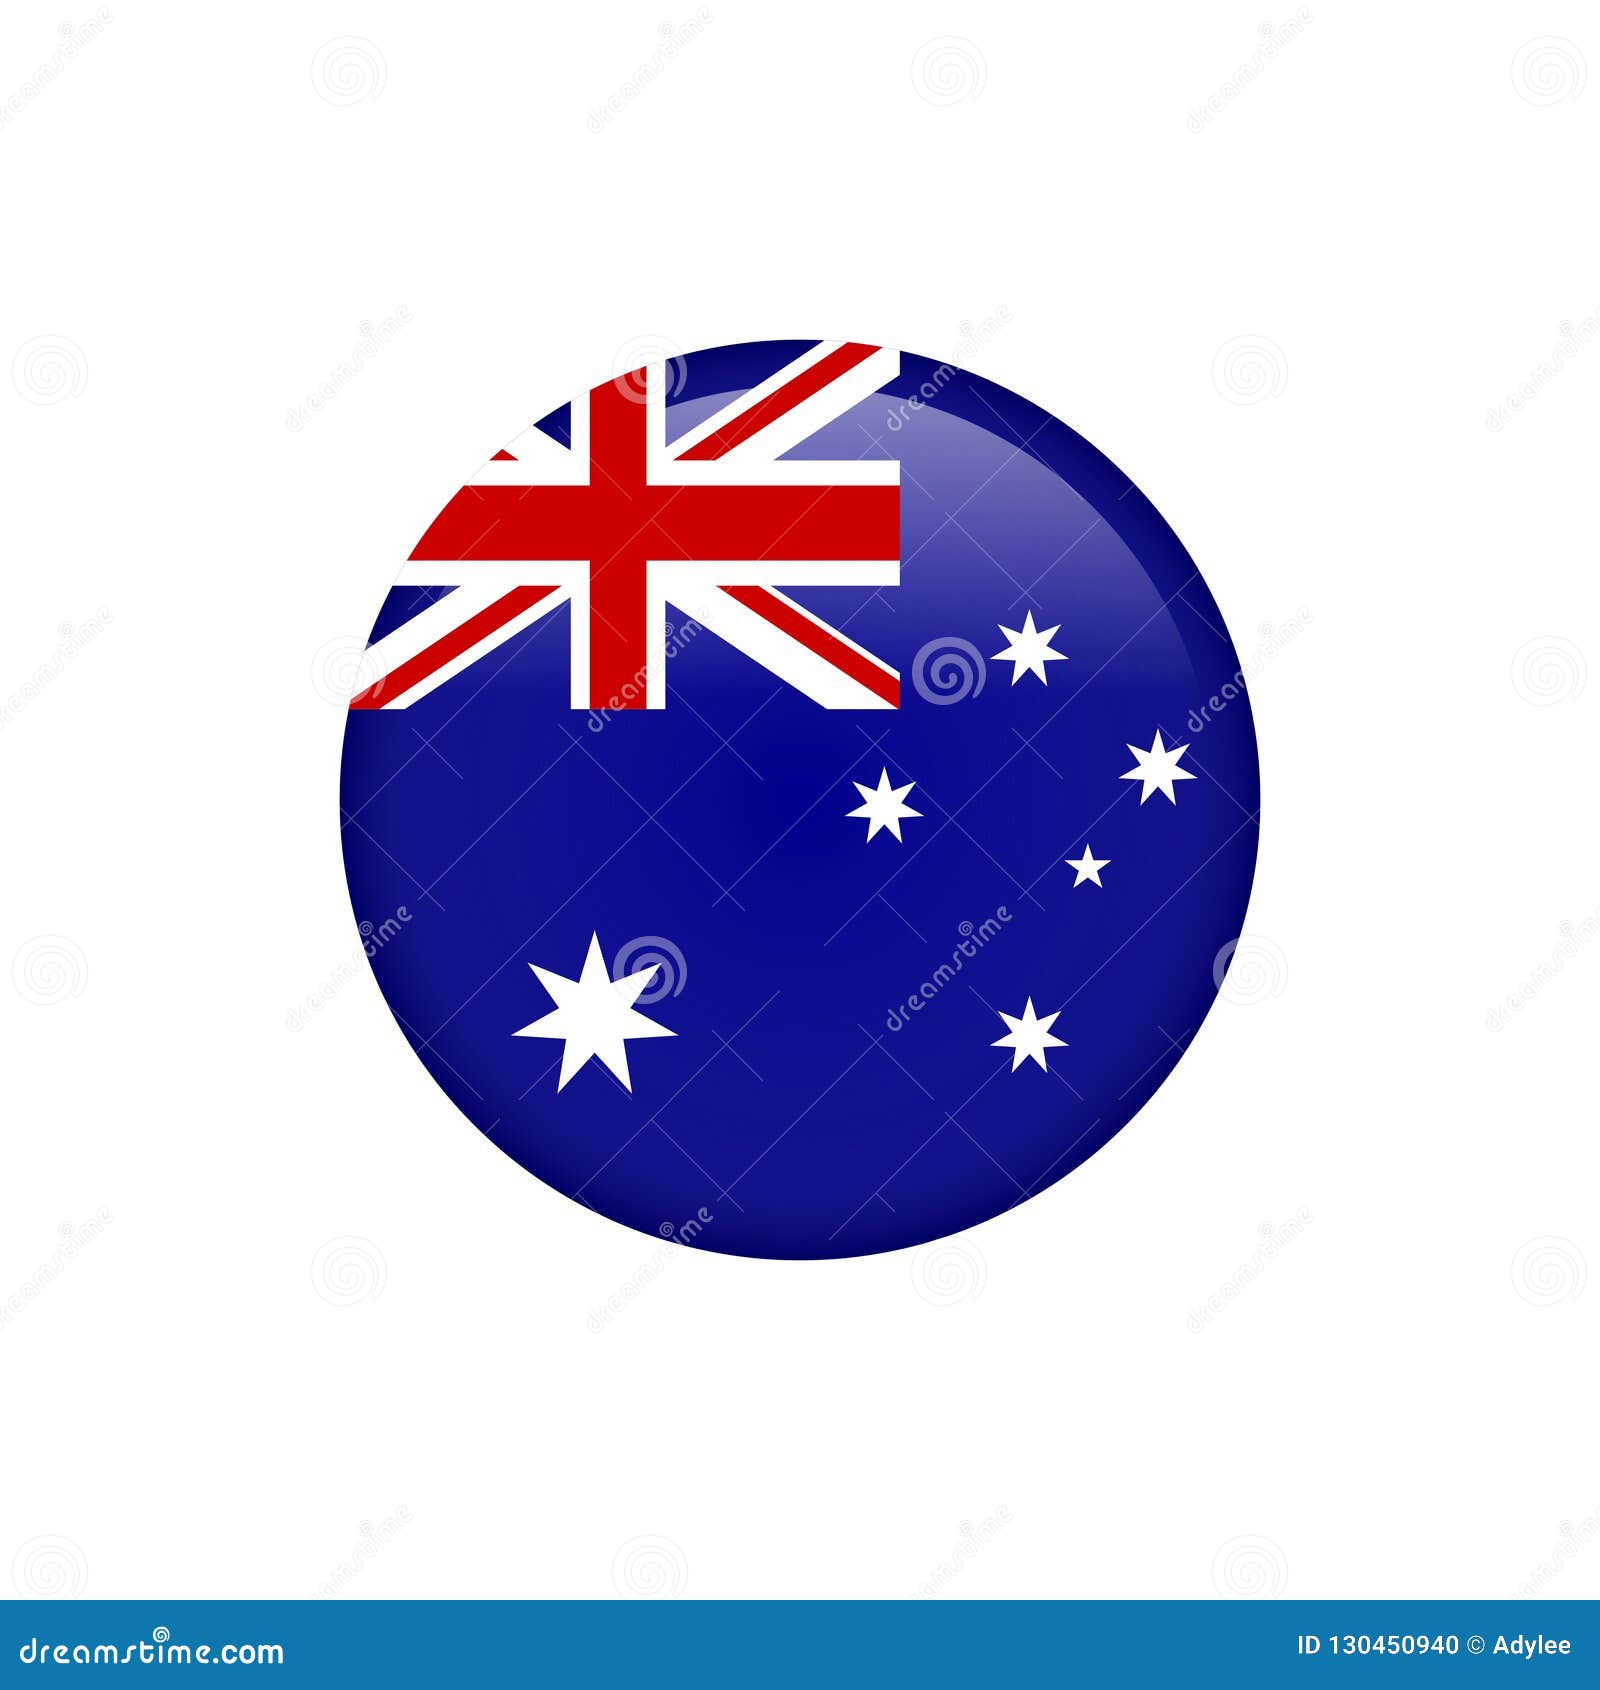 Stock Vector Australia Flag Icon 5 Stock Photo of australian, 130450940